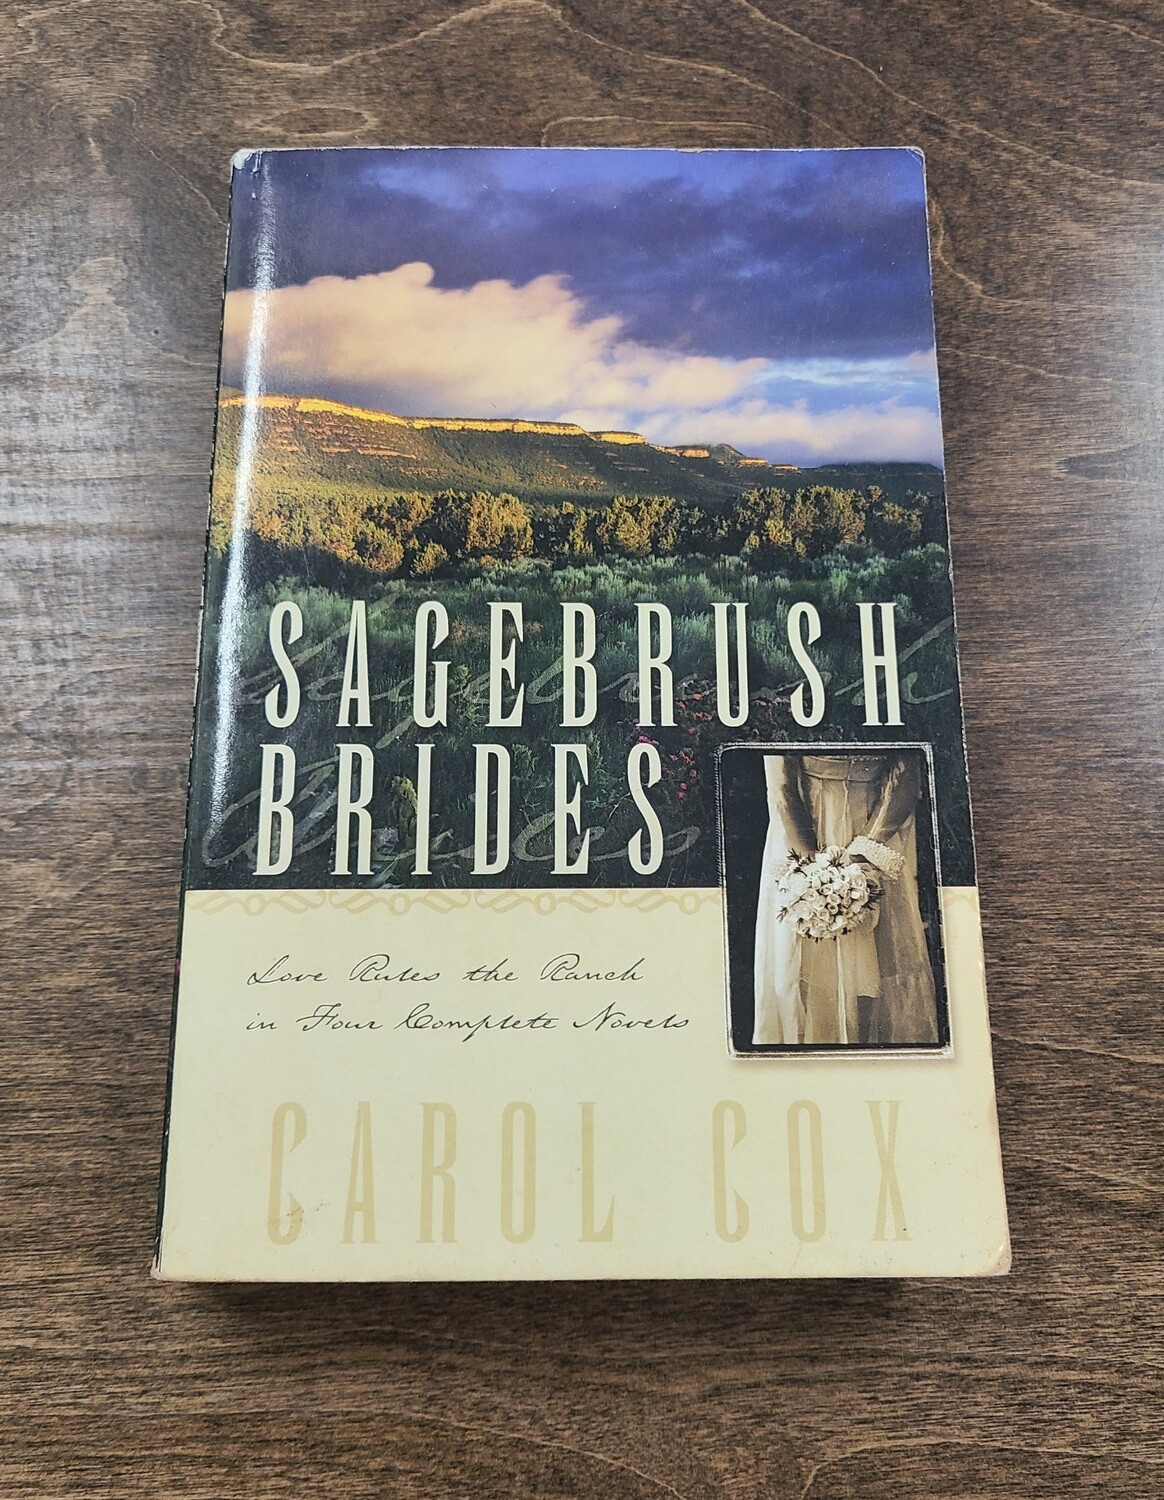 Sagebrush Brides by Carol Cox